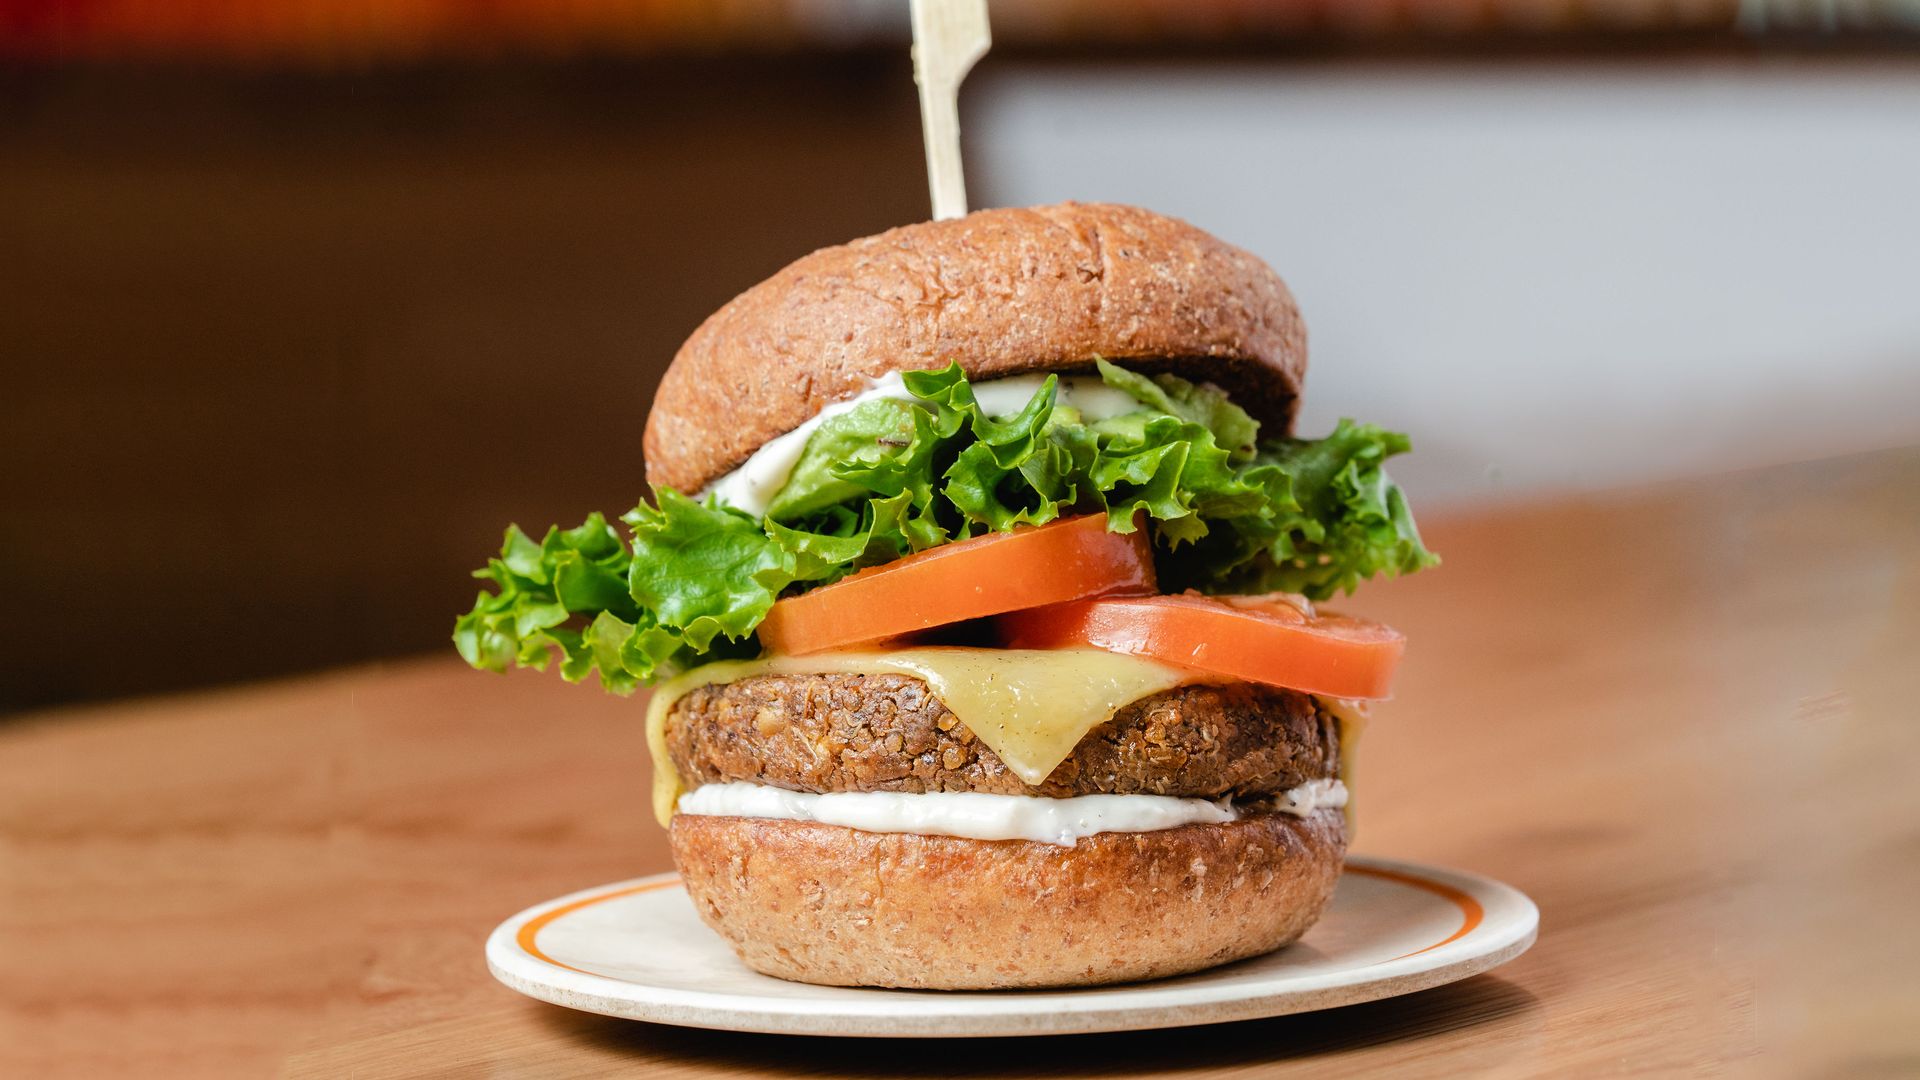 A plant-based hamburger from restaurant chain Next Level Burger.